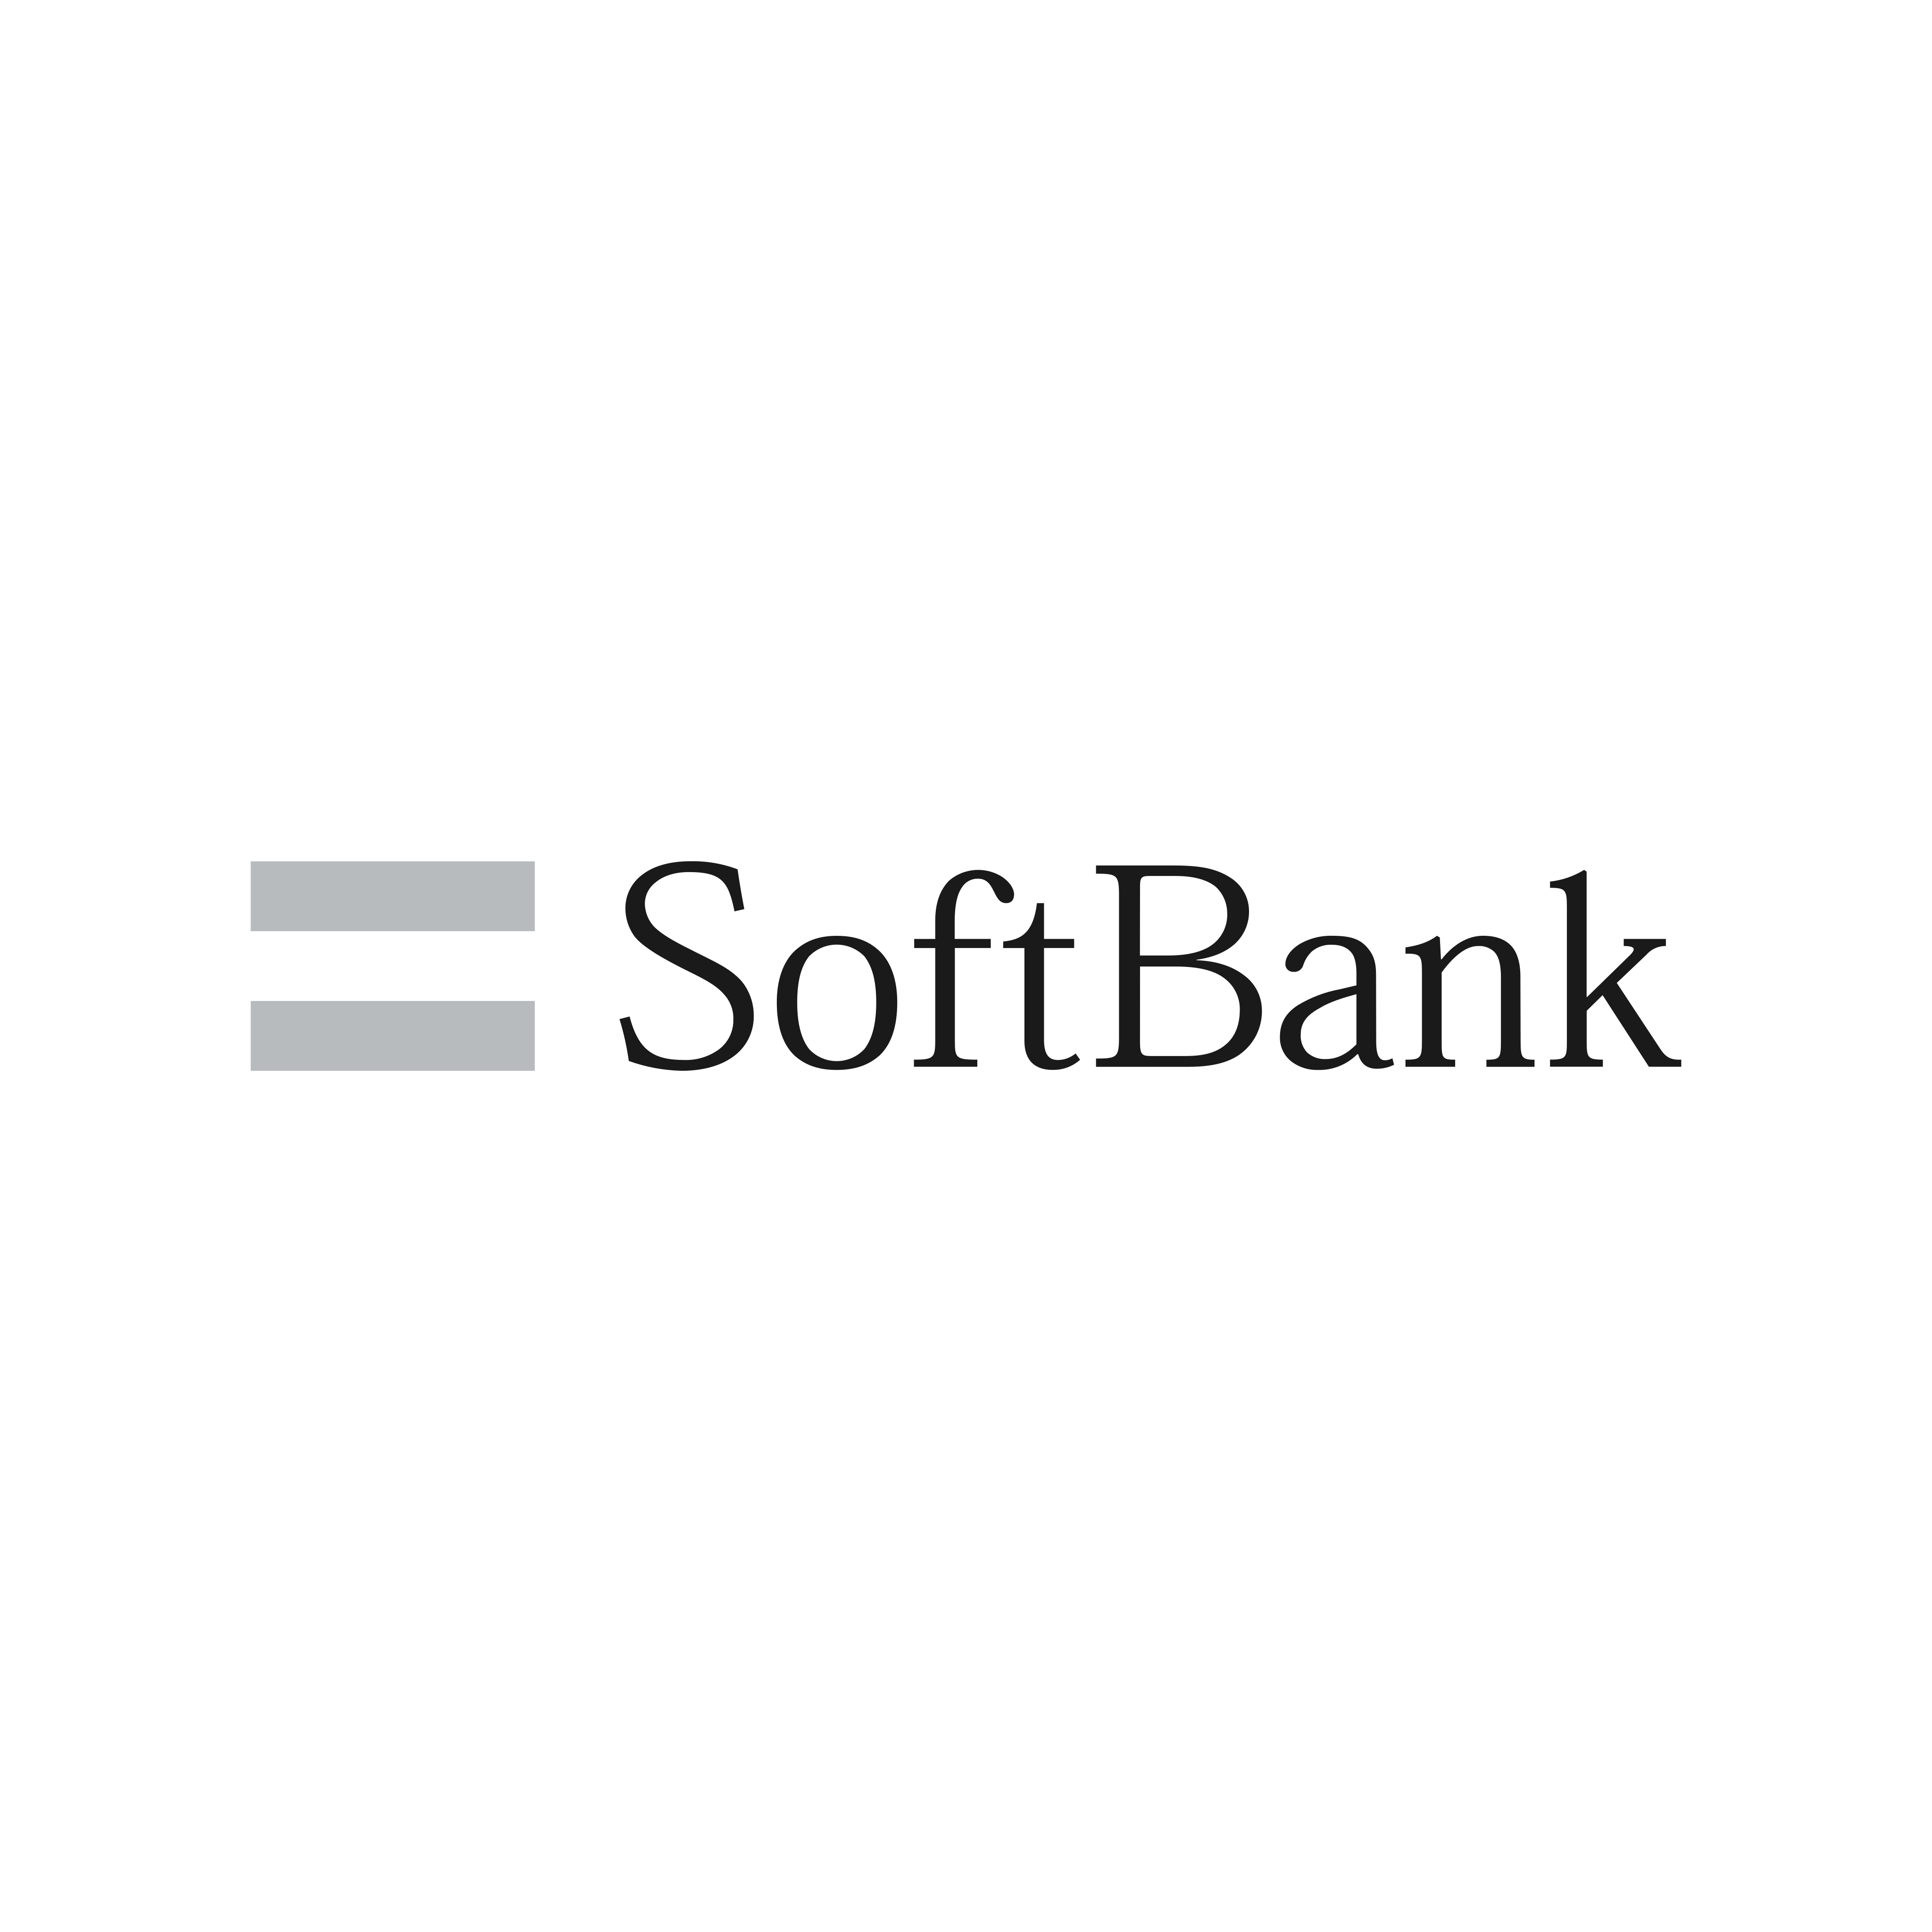 SoftBank Logo PNG.